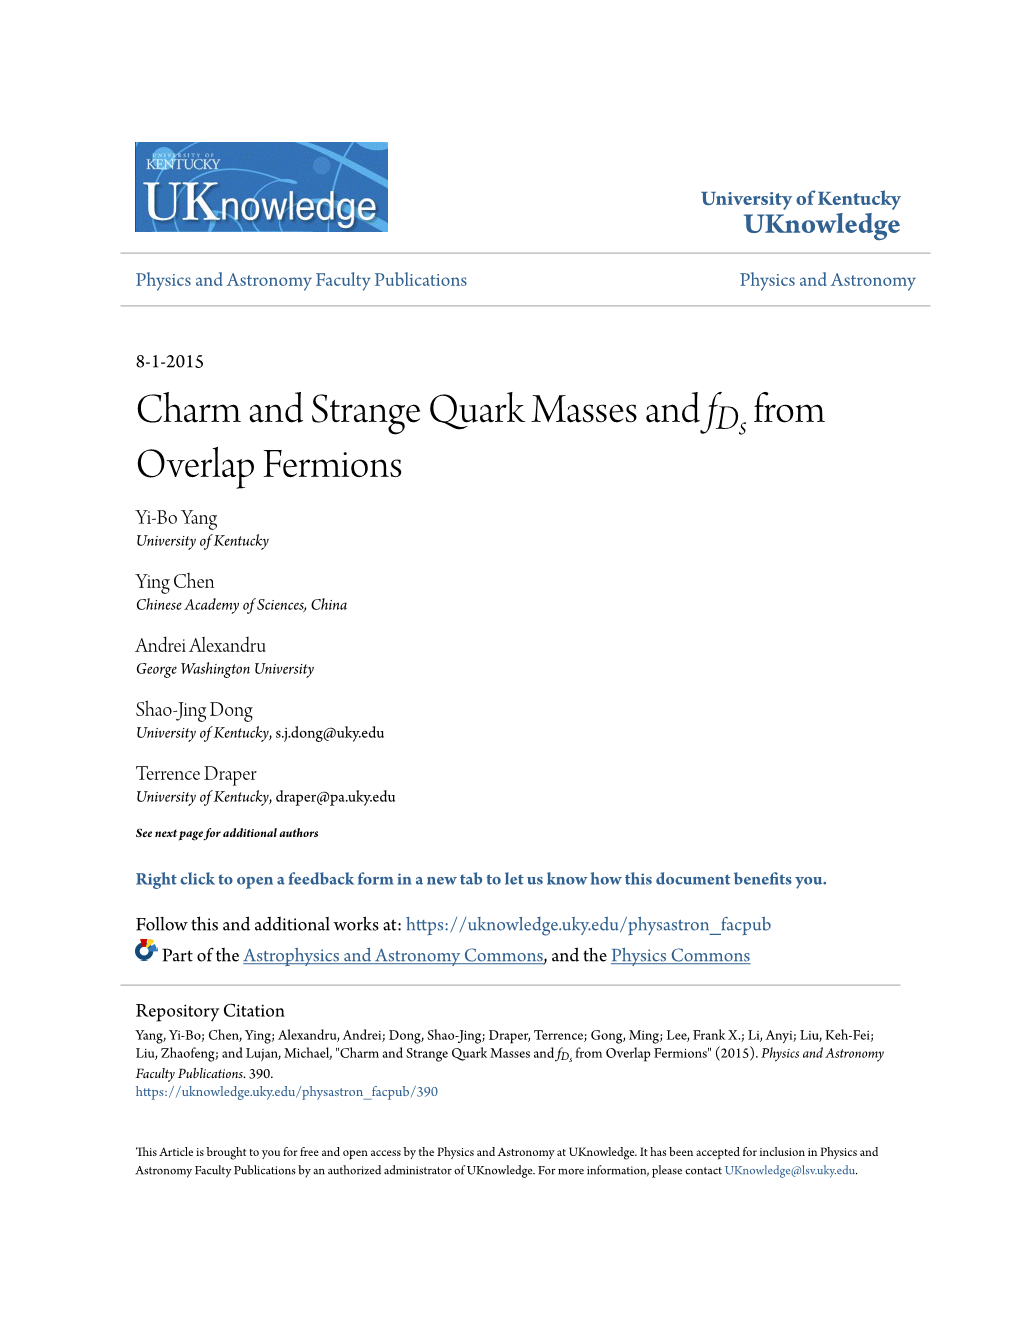 Charm and Strange Quark Masses and Fds from Overlap Fermions Yi-Bo Yang University of Kentucky